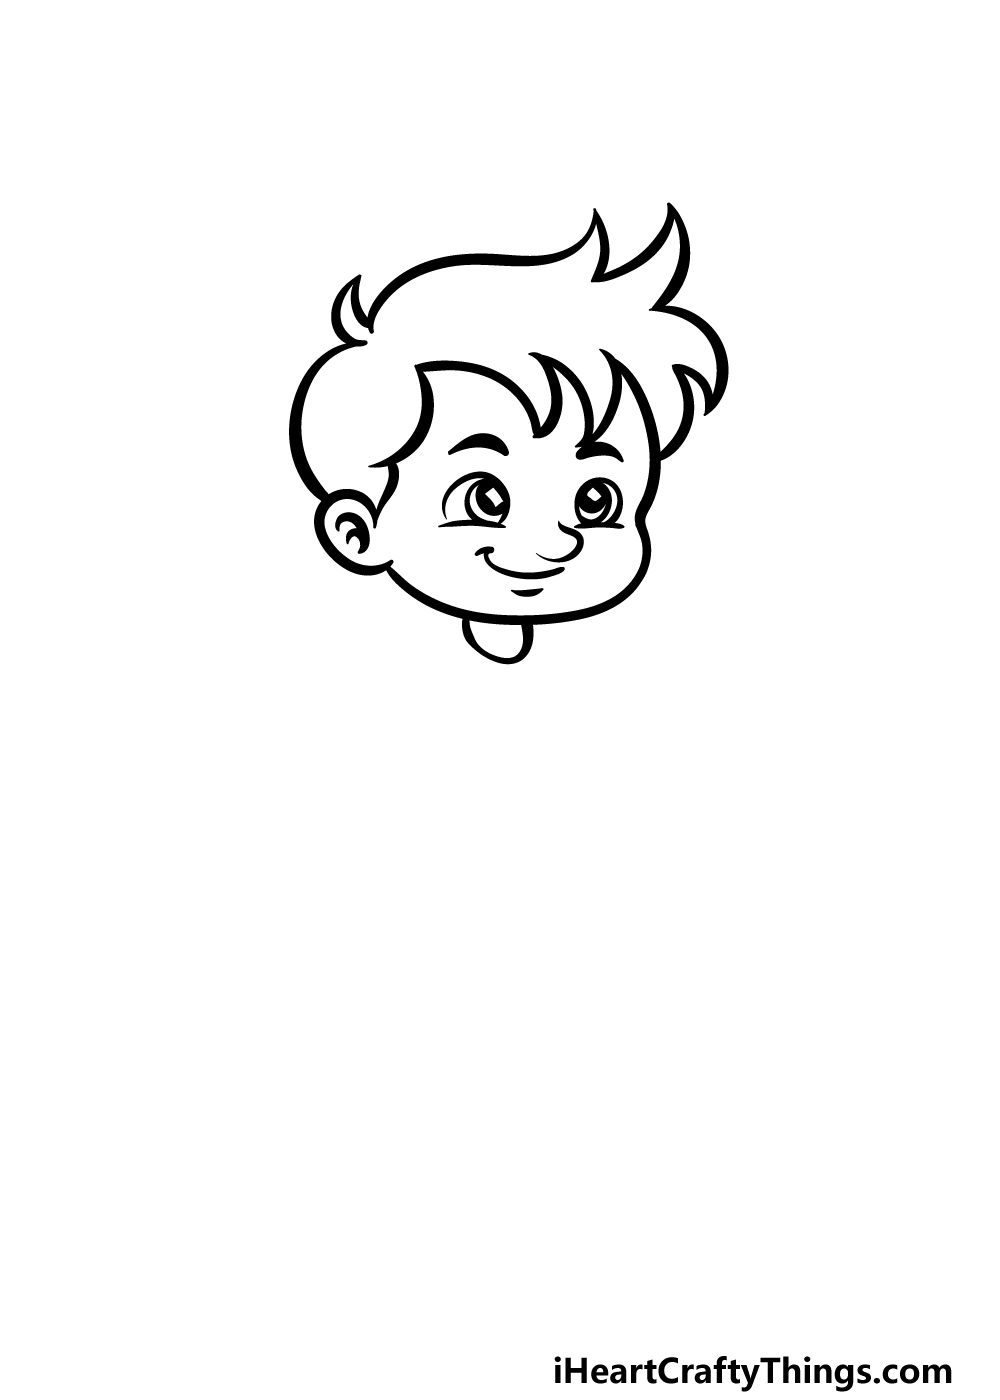 how to draw a cartoon boy step 2